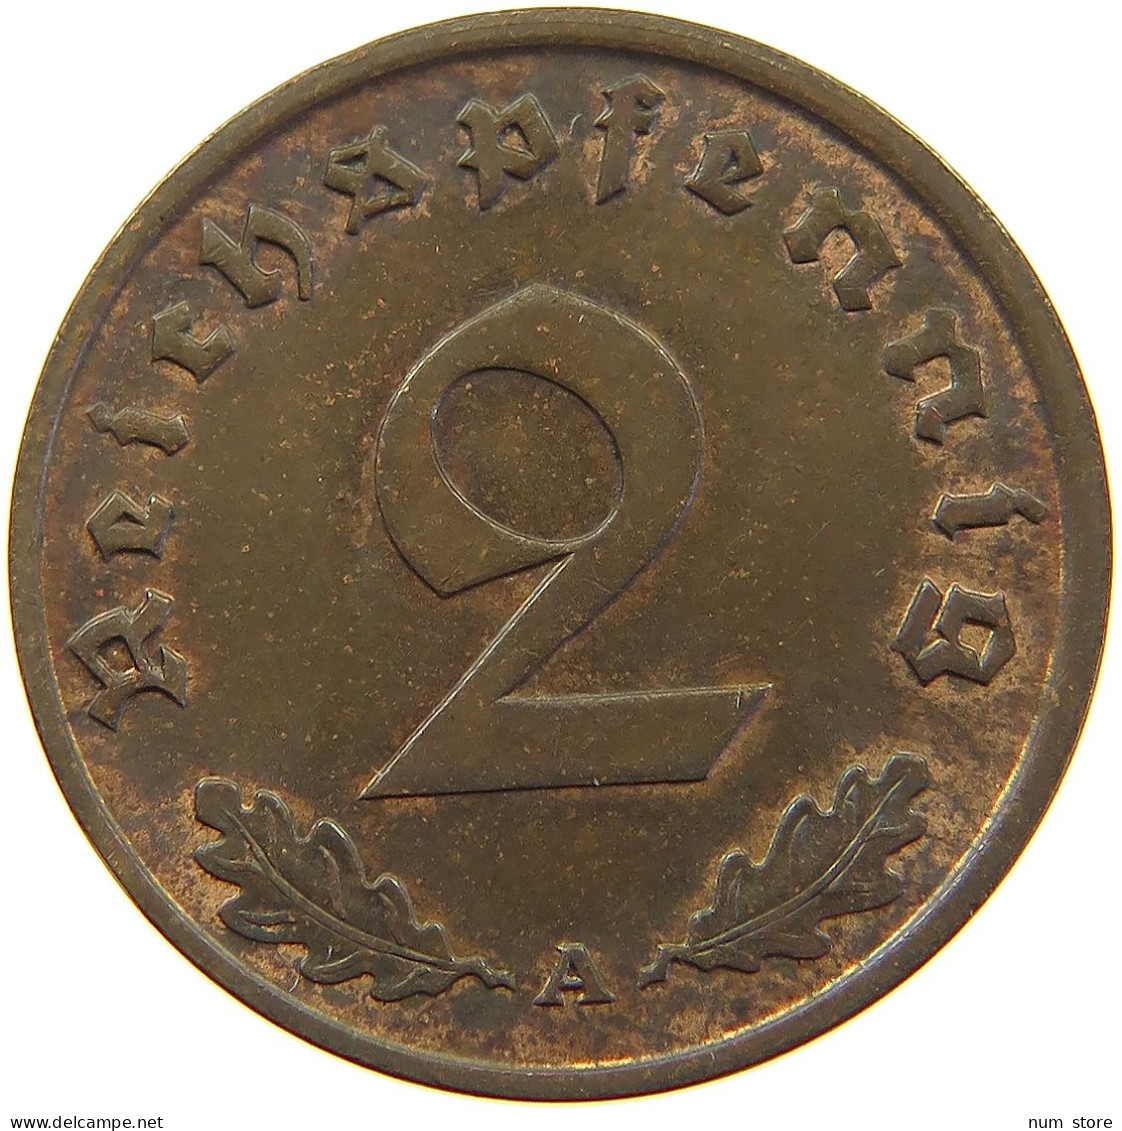 GERMANY 2 PFENNIG 1937 A TOP #a013 0091 - 2 Reichspfennig